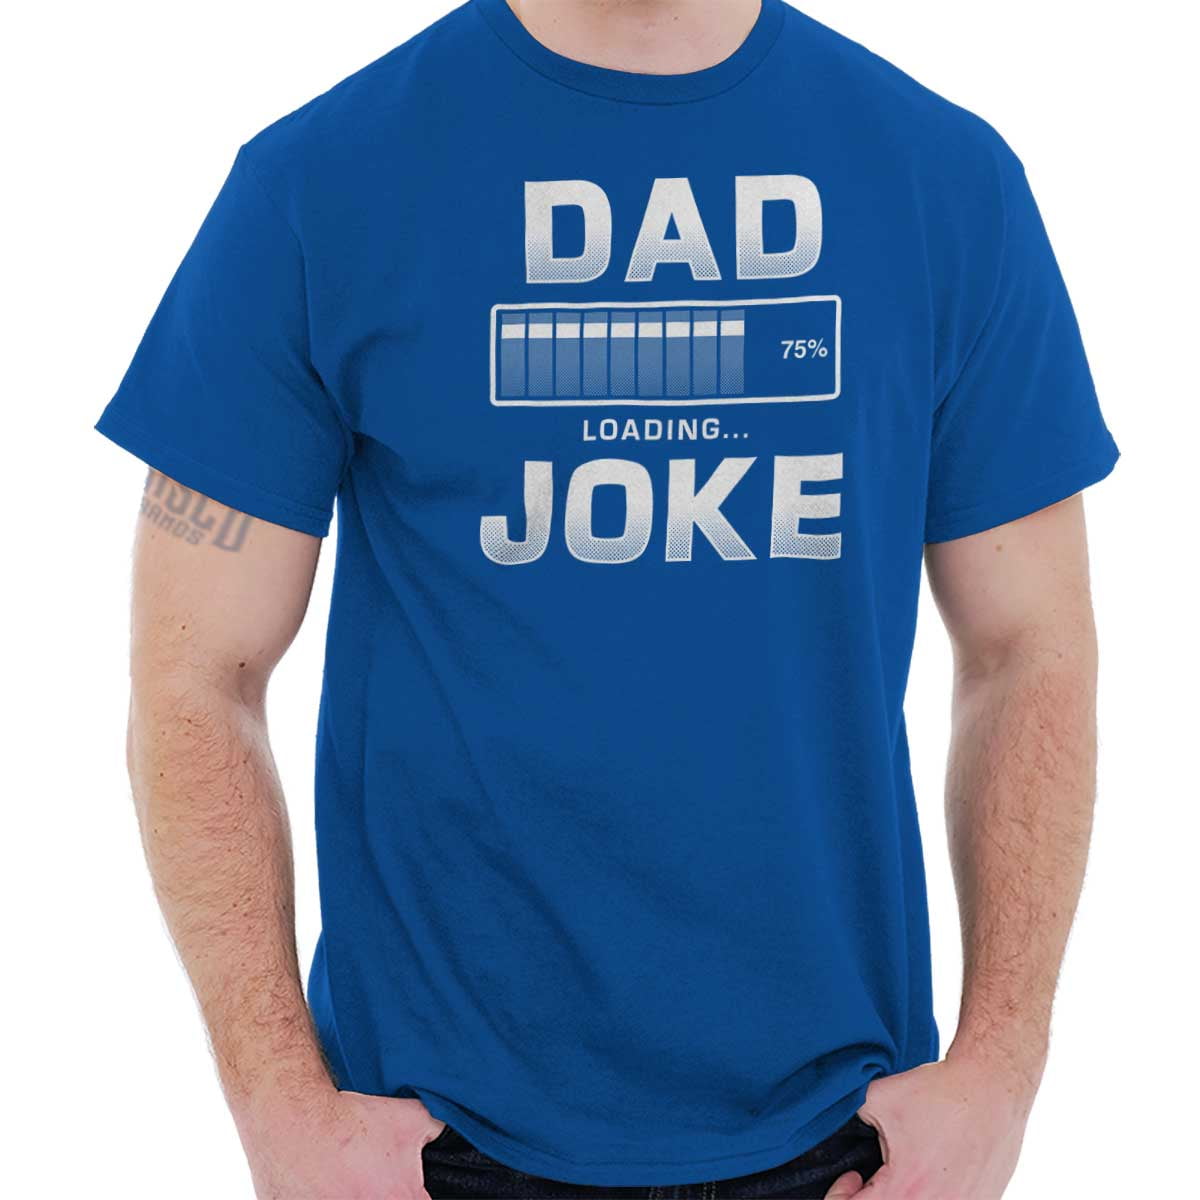 Dad Joke Loading Funny Funny Nerdy Geeky T Shirt Tee - Walmart.com